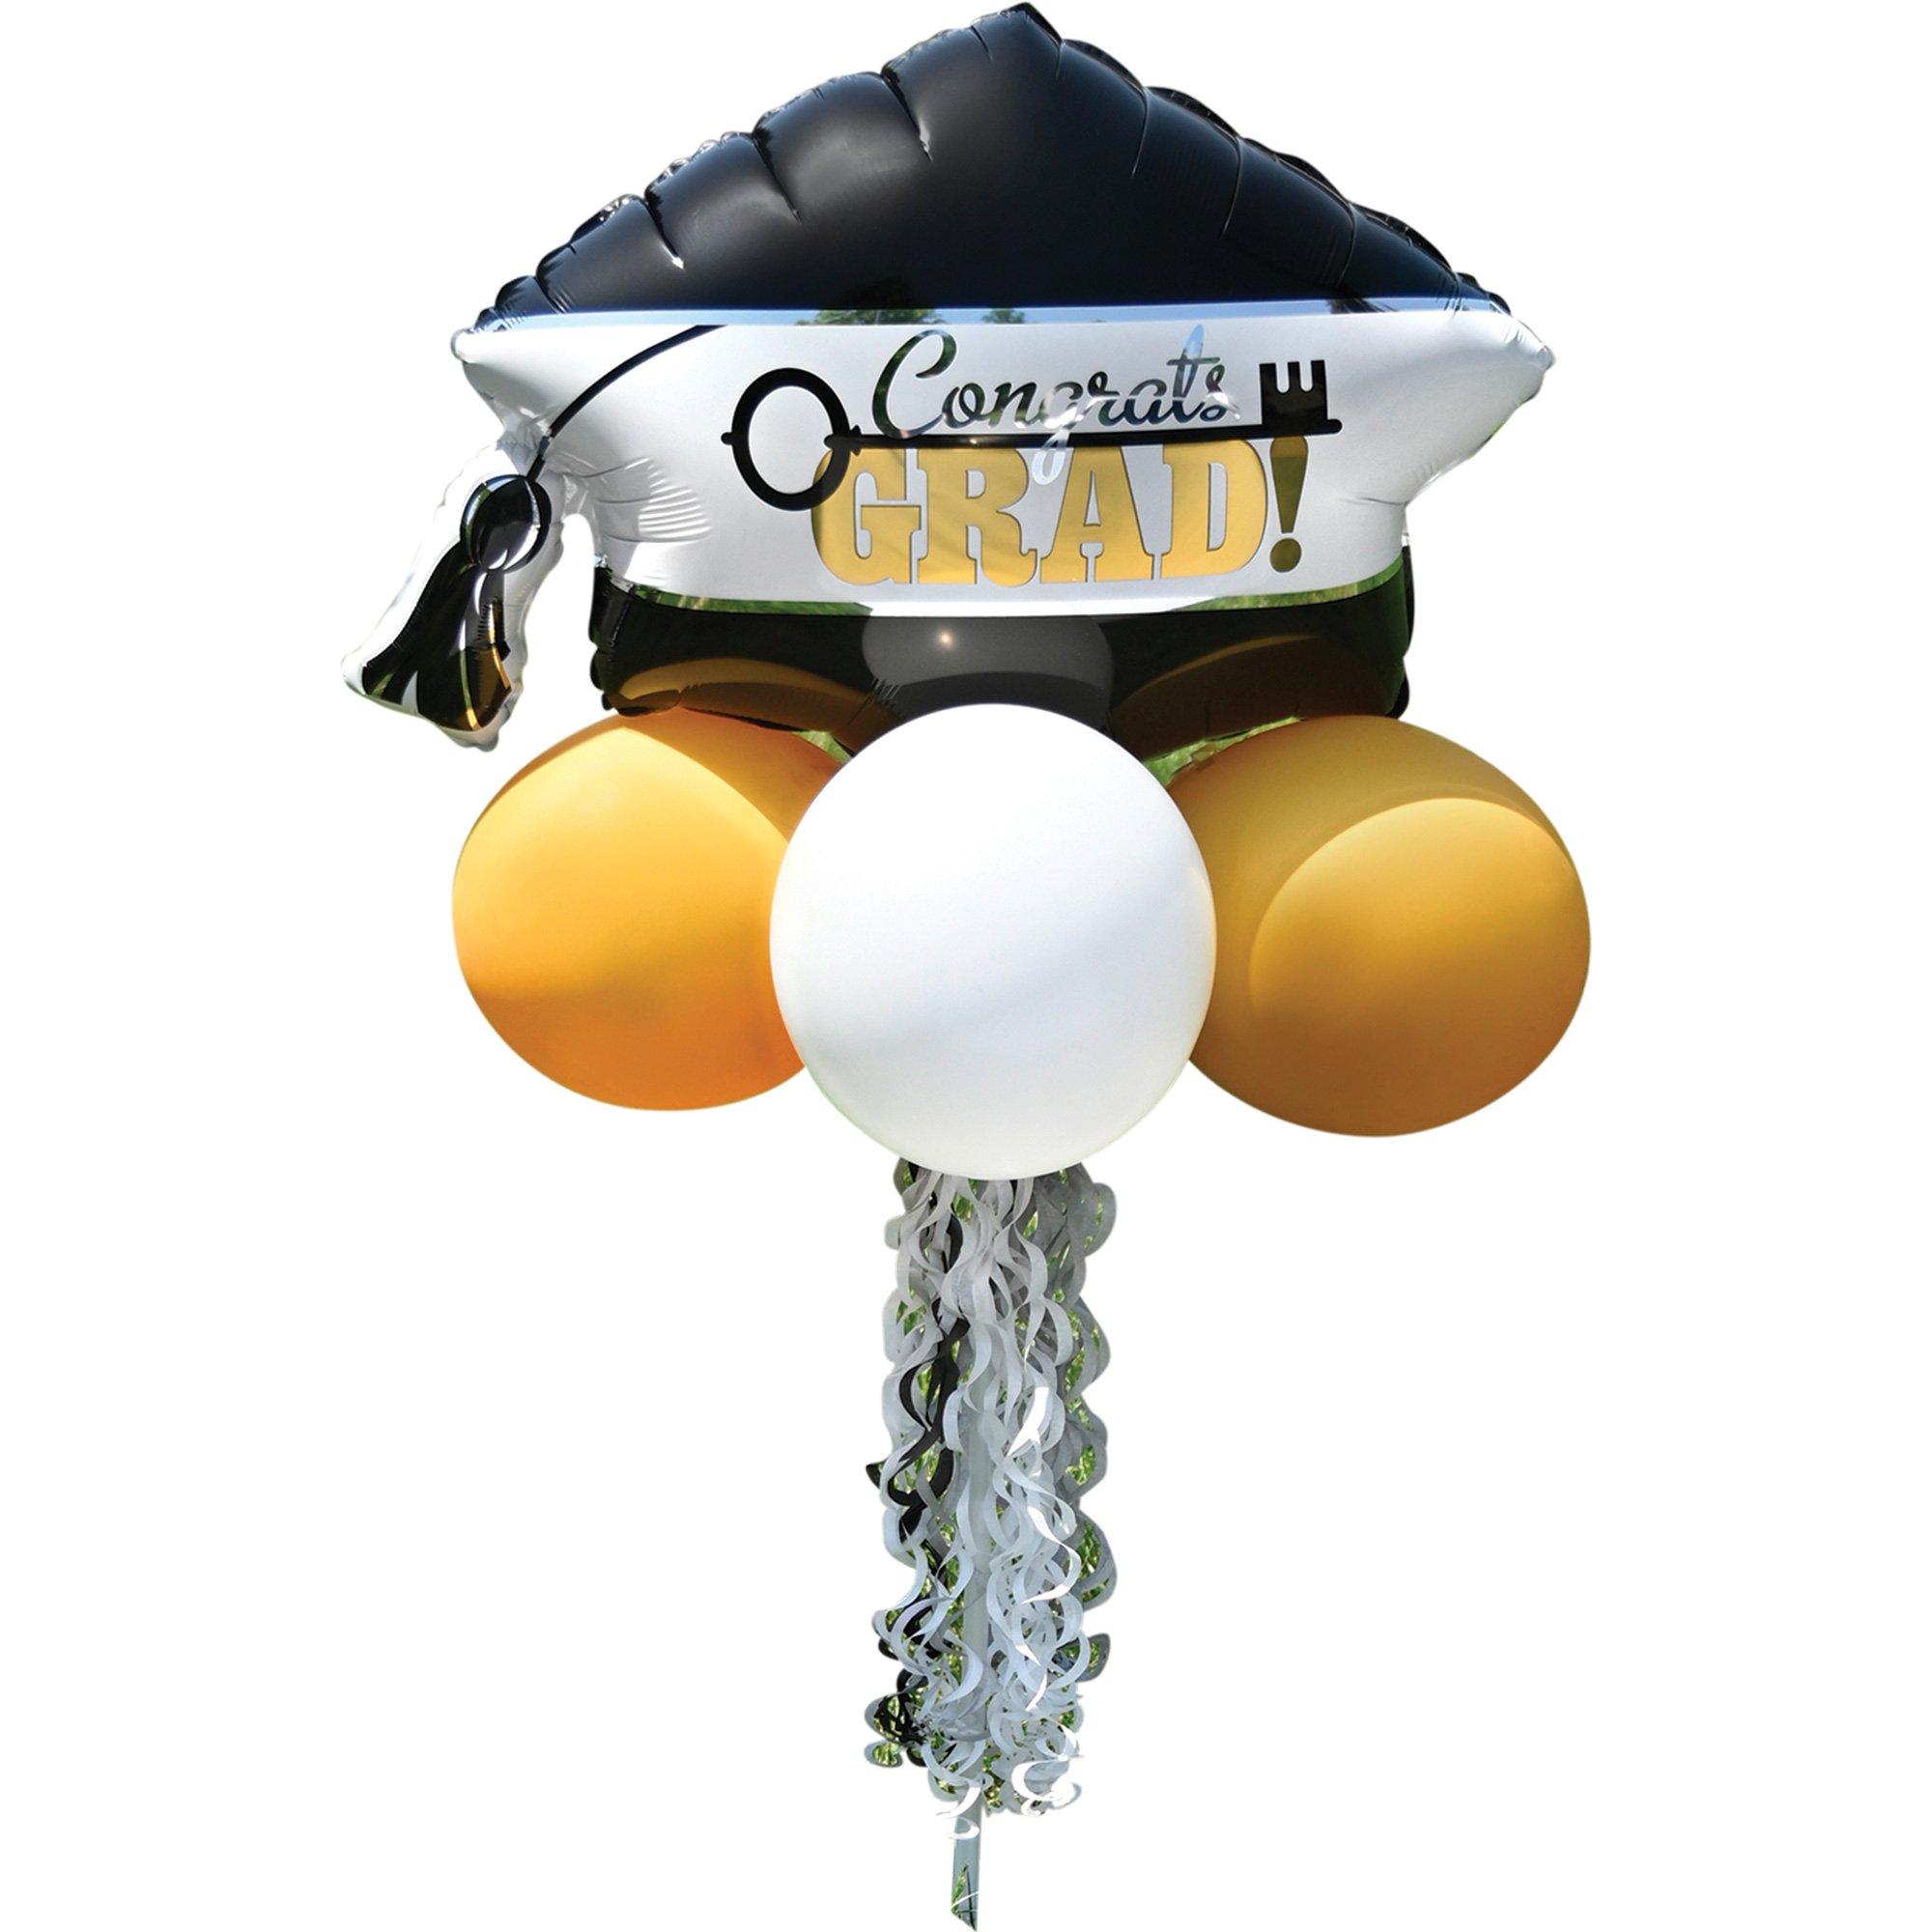 Air-filled Congrats Grad Foil & Latex Balloon Yard Sign, 5.3ft - Achievement is Key